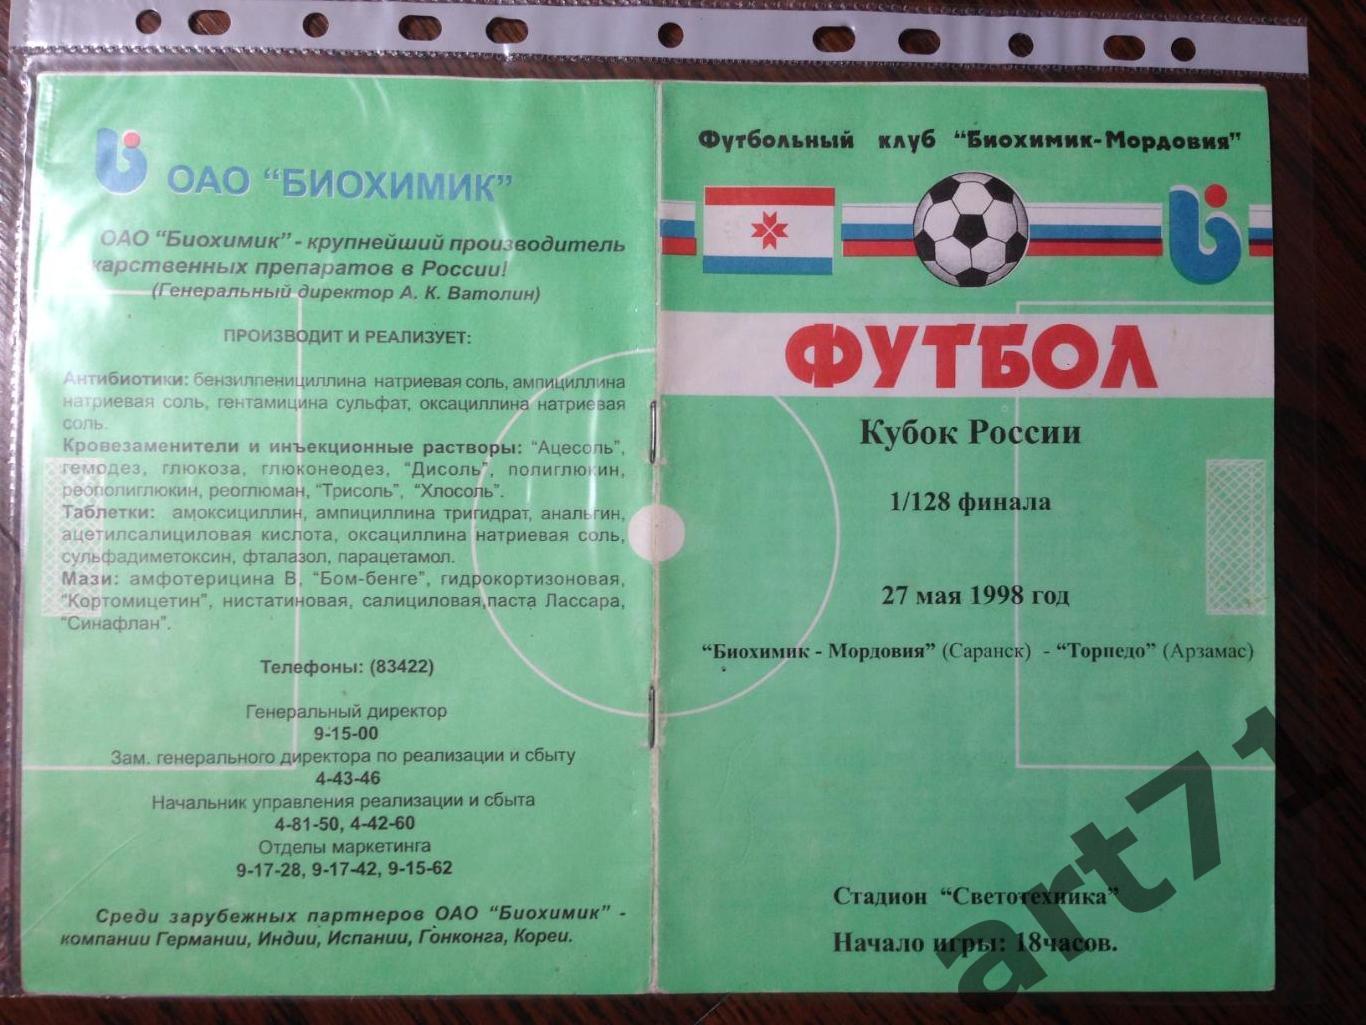 + Биохимик-Мордовия Саранск - Торпедо Арзамас 1998 Кубок России